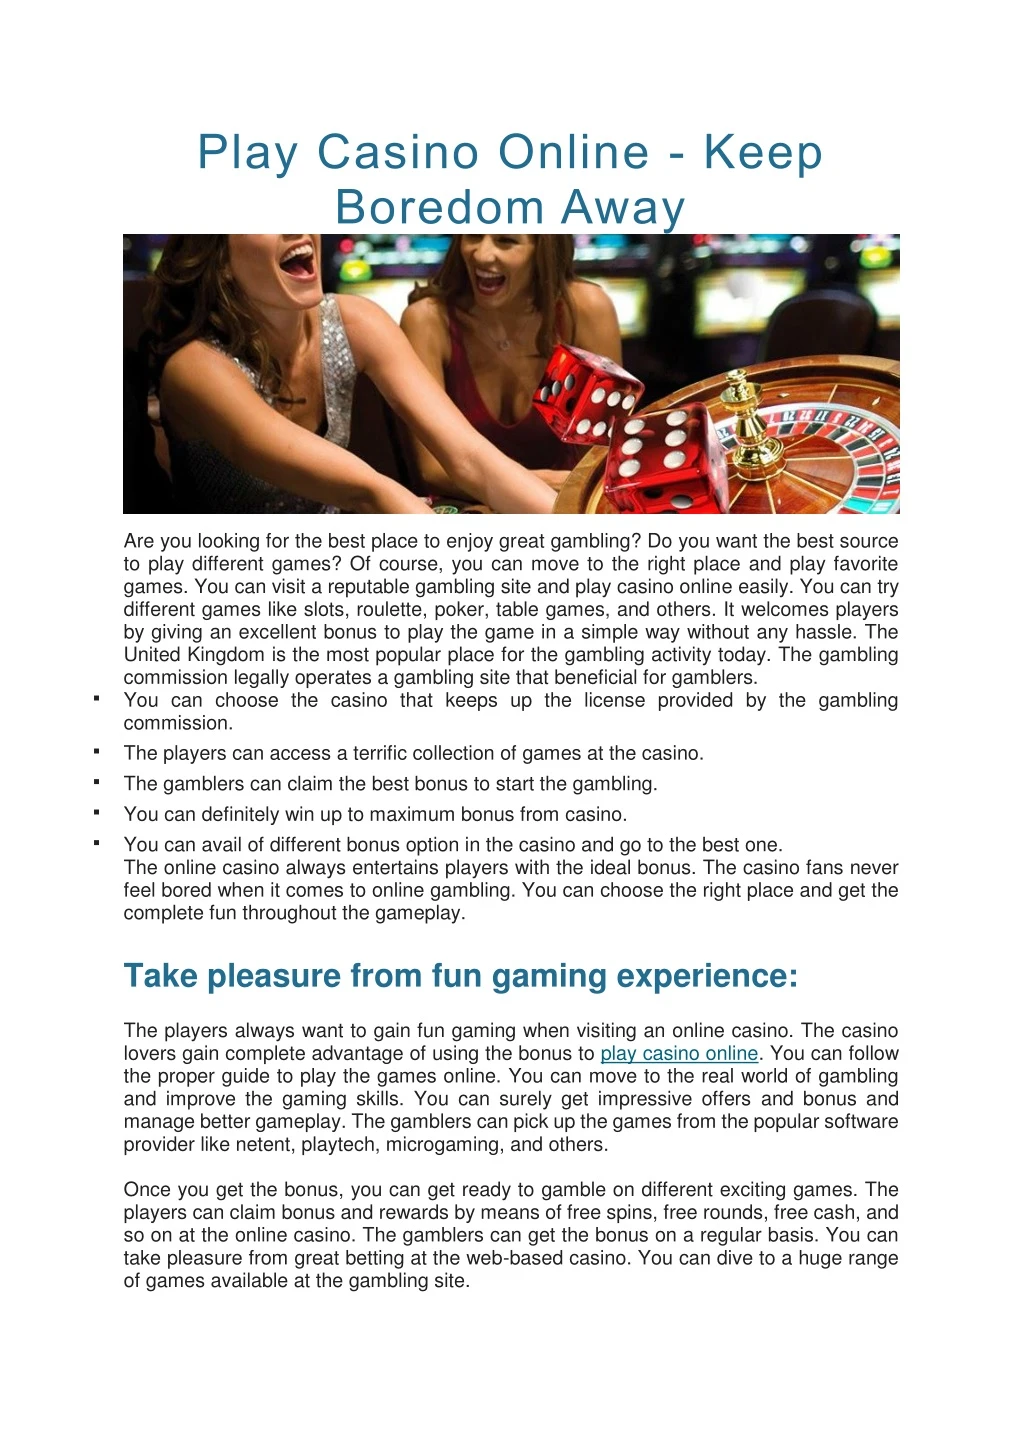 play casino online keep boredom away